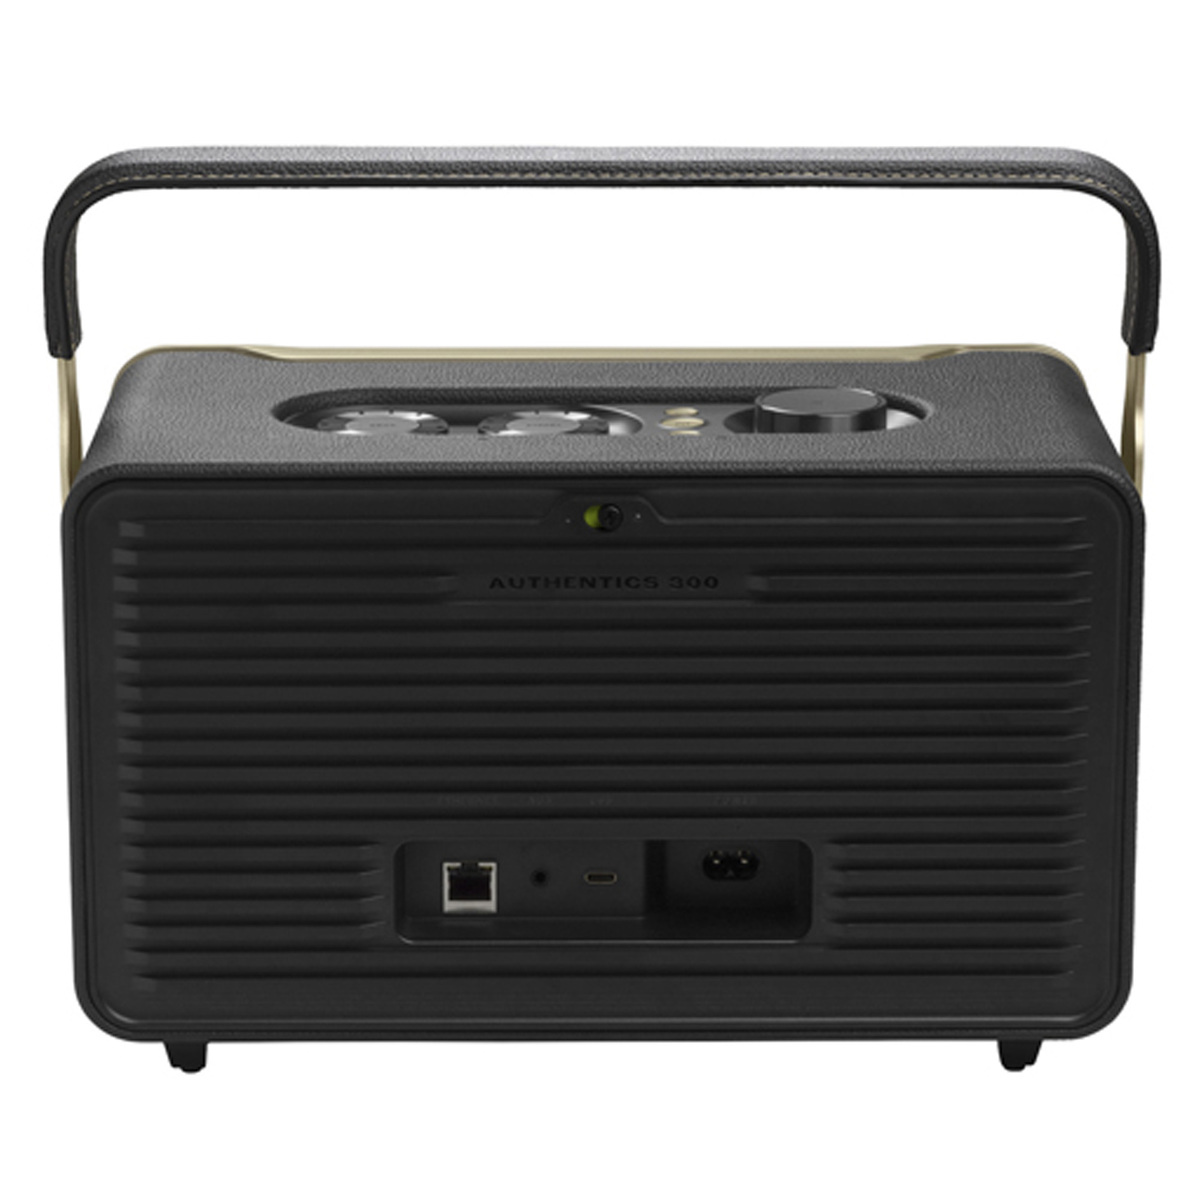 JBL Authentics 300 Portable Smart Home Speaker with Wi-Fi Retro Design, Black